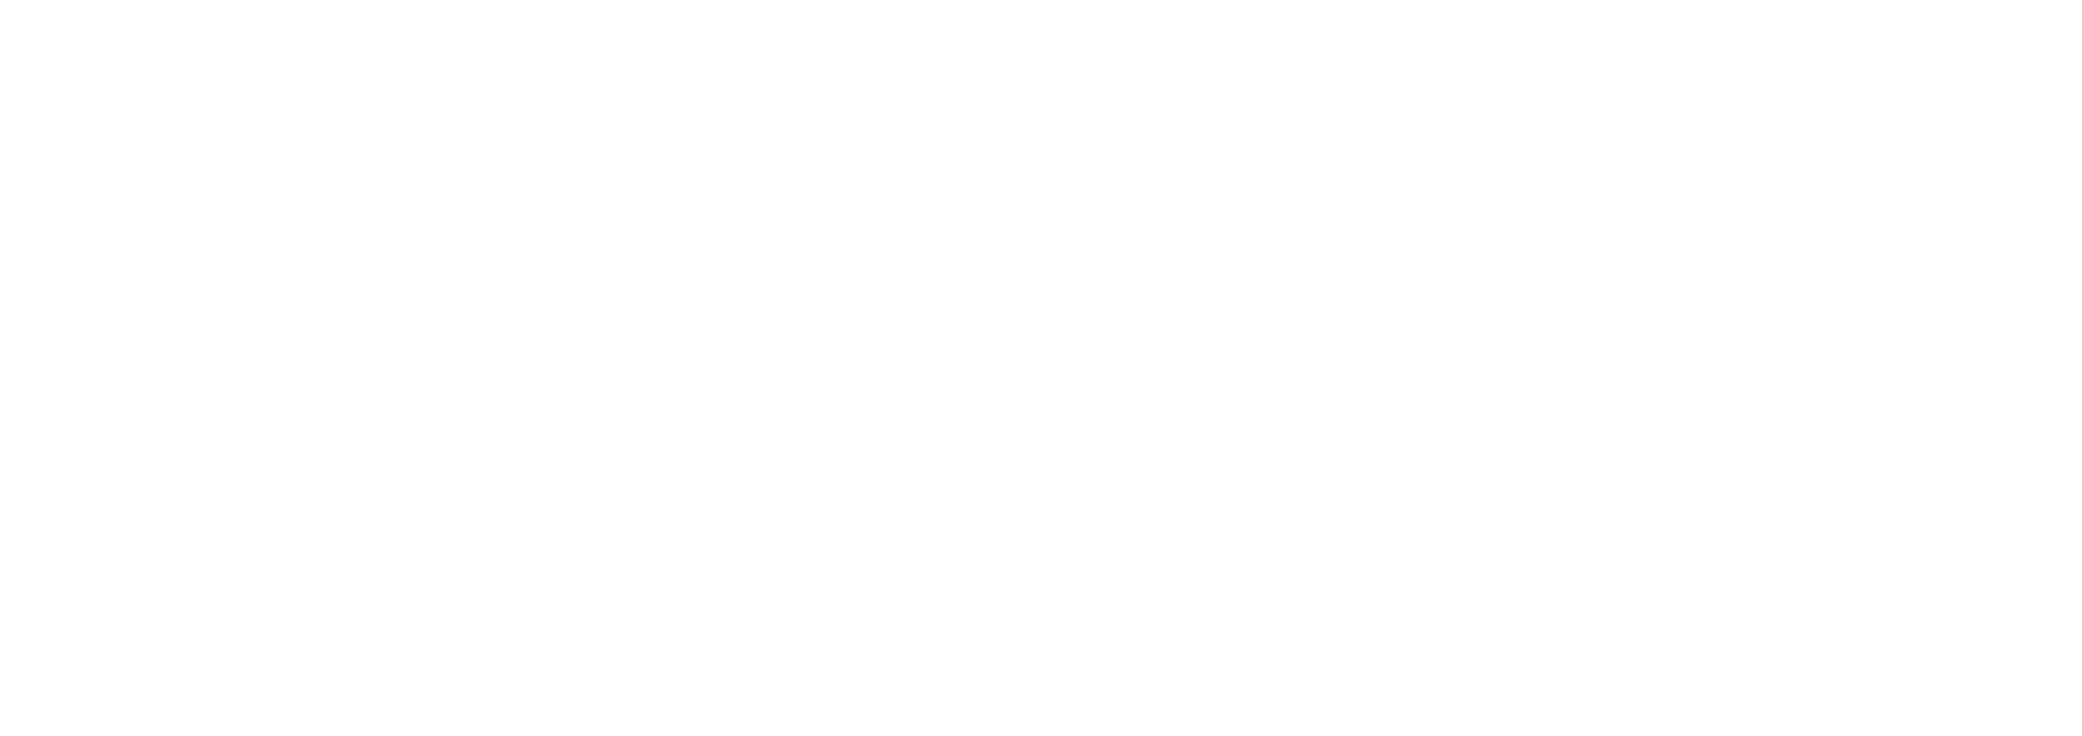 Download Timbertop Chevron - Timberk Png Logo PNG Image with No ...